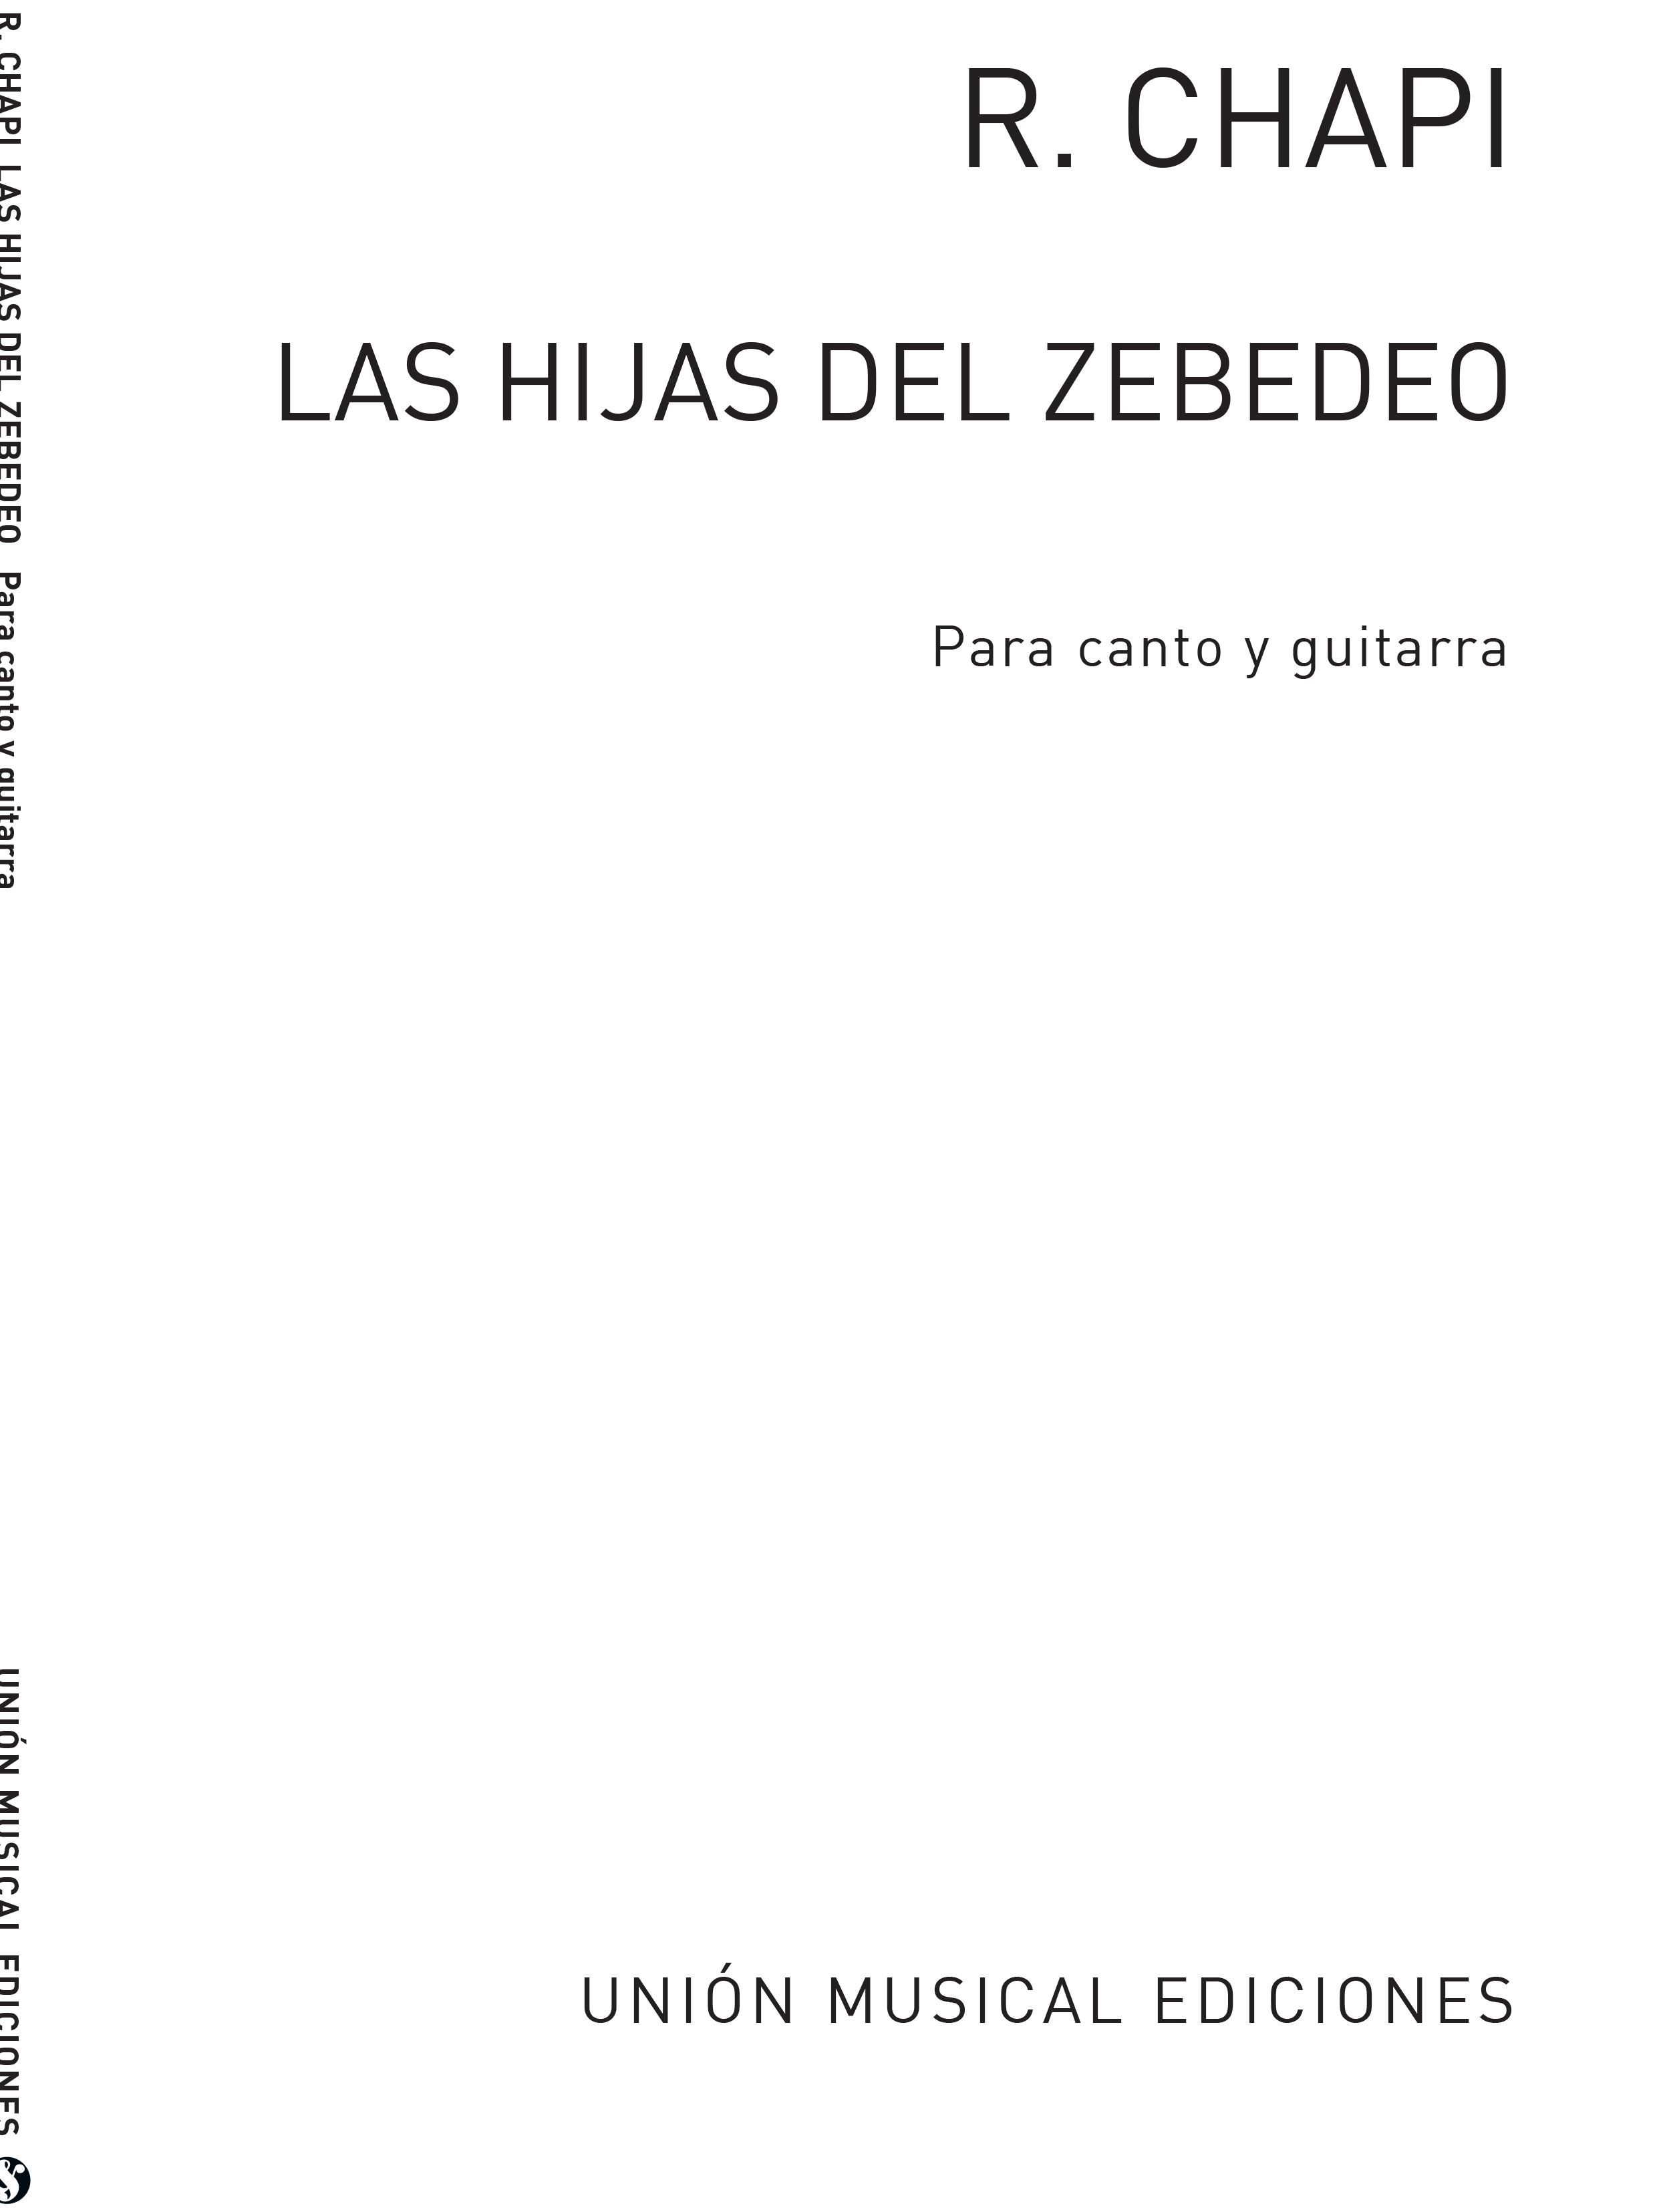 Ruperto Chapi: Las Hijas Del Zebedeo Carceleras (Azpiazu): Voice: Vocal Work